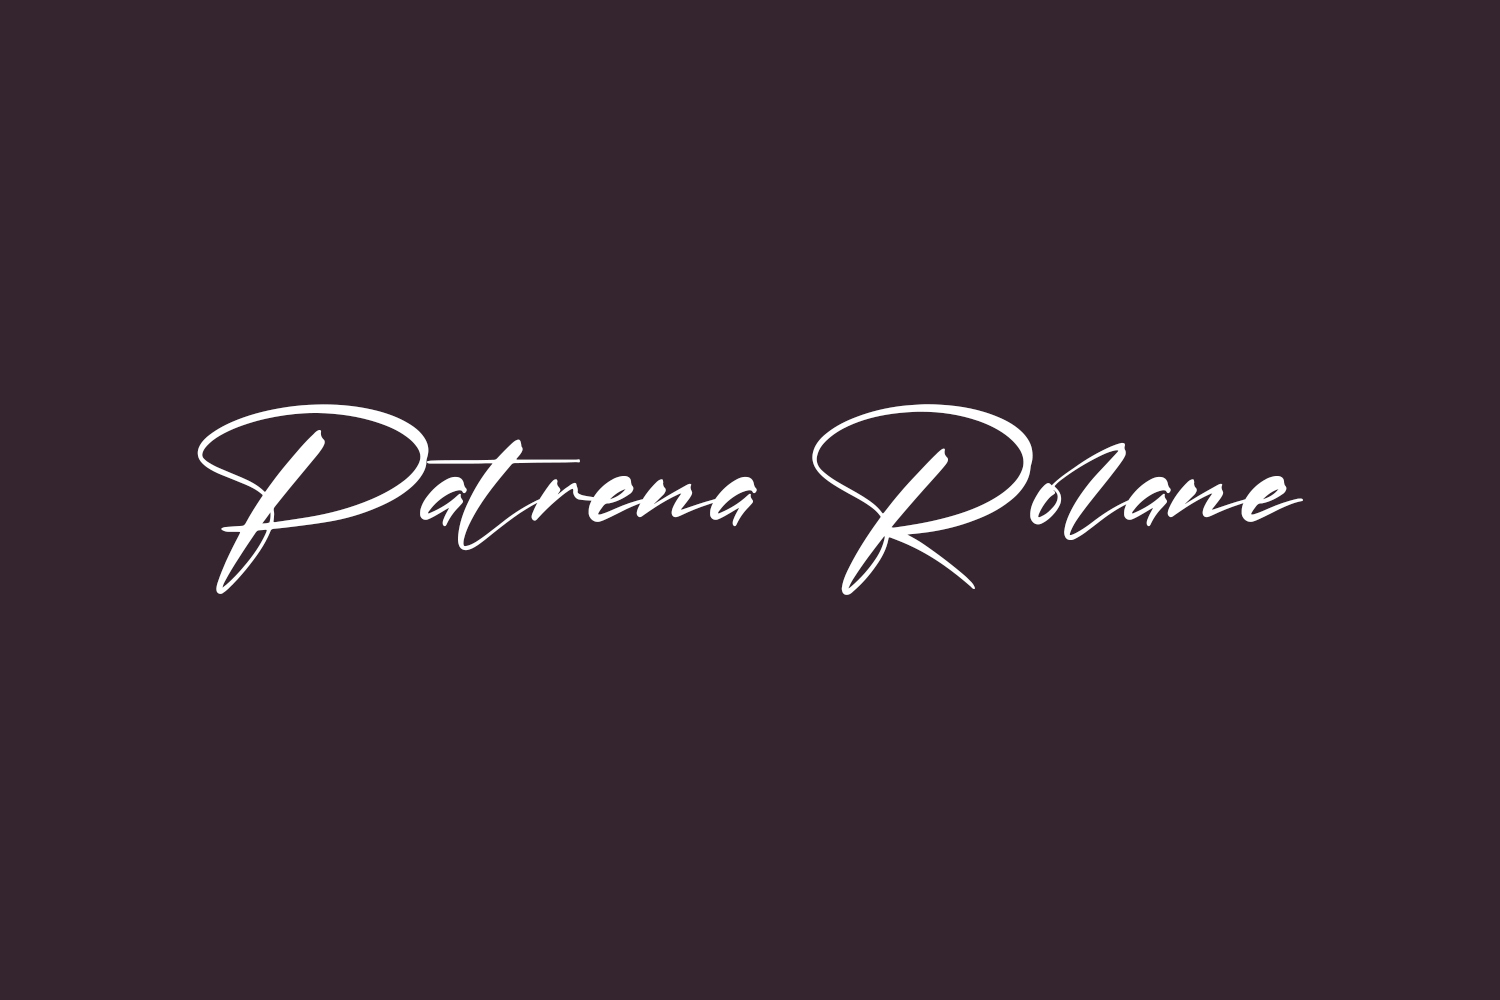 Patrena Rolane Free Font